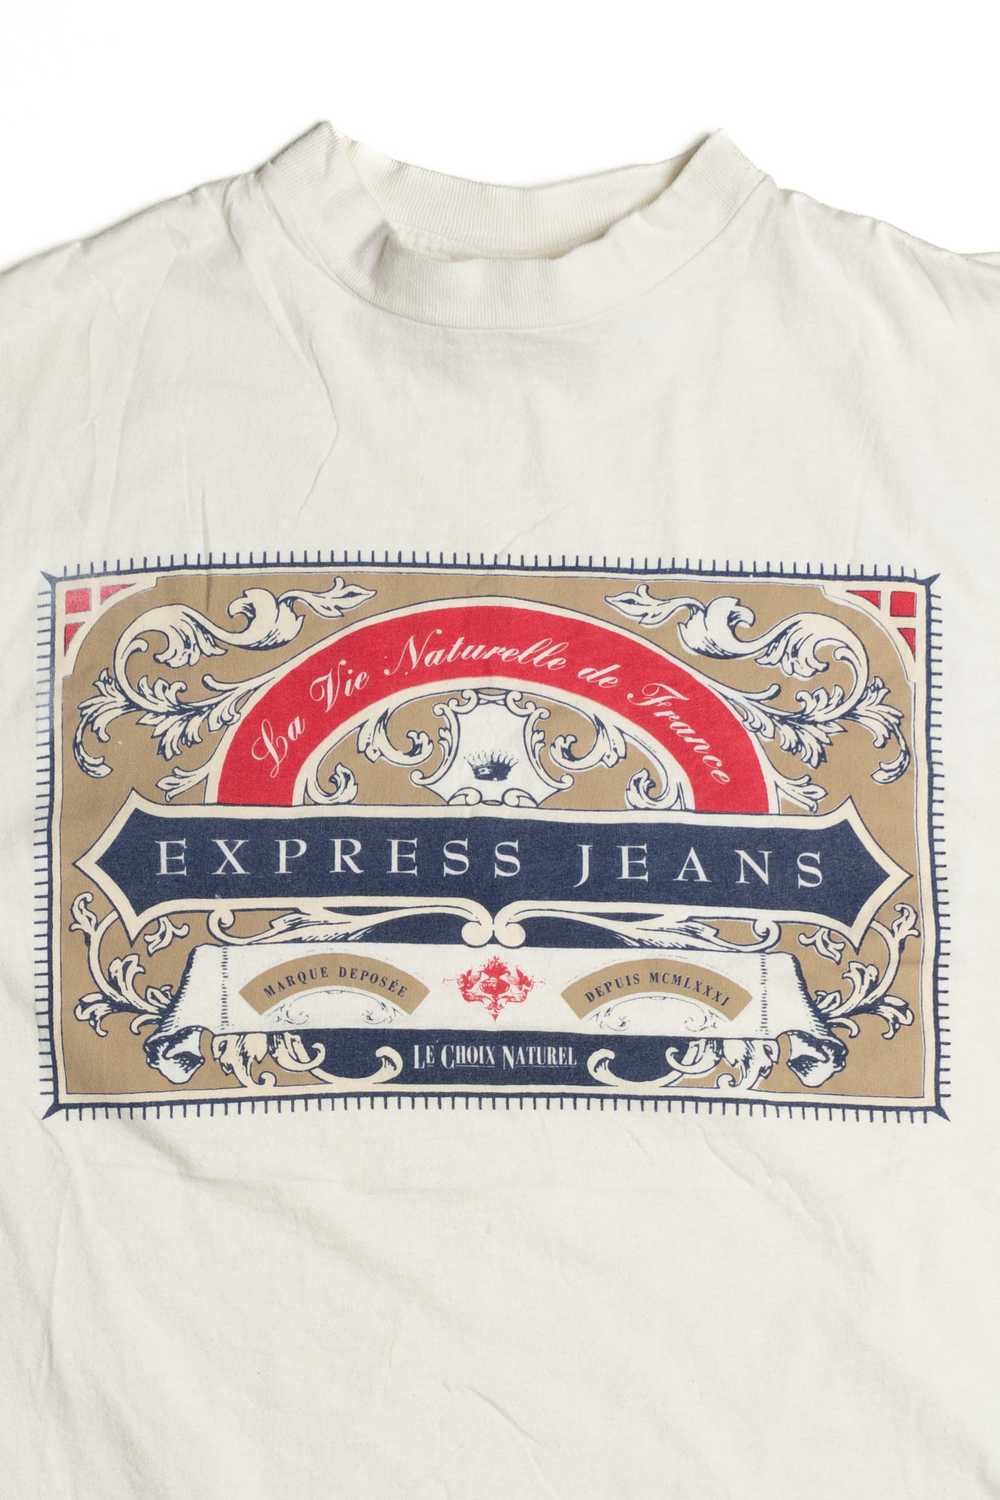 Express Jeans T-Shirt - image 1